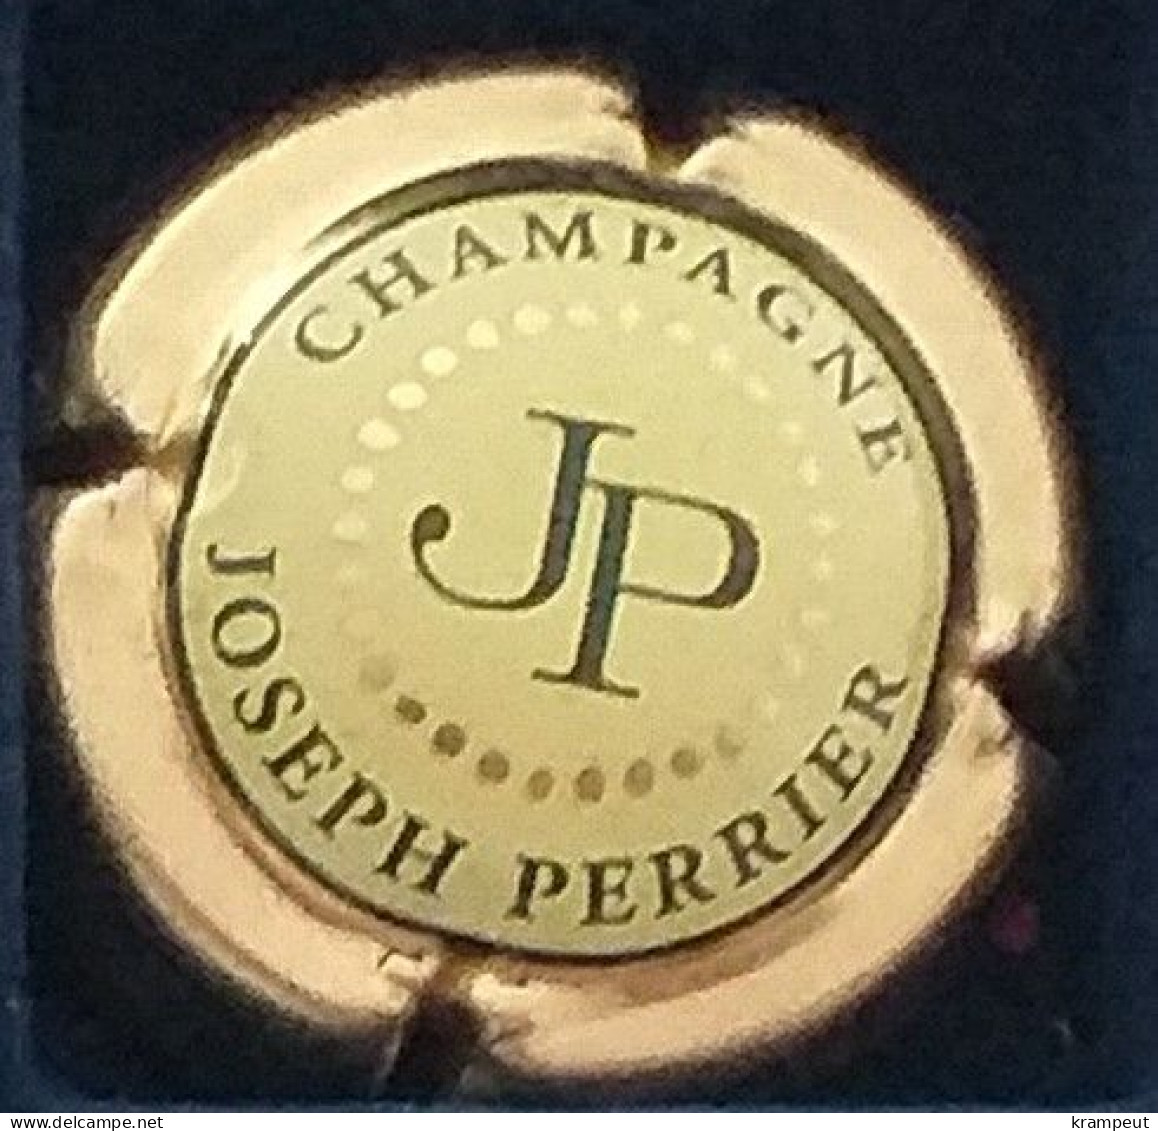 P65 JOSEPH PERRIER 74 - Perrier Jouet